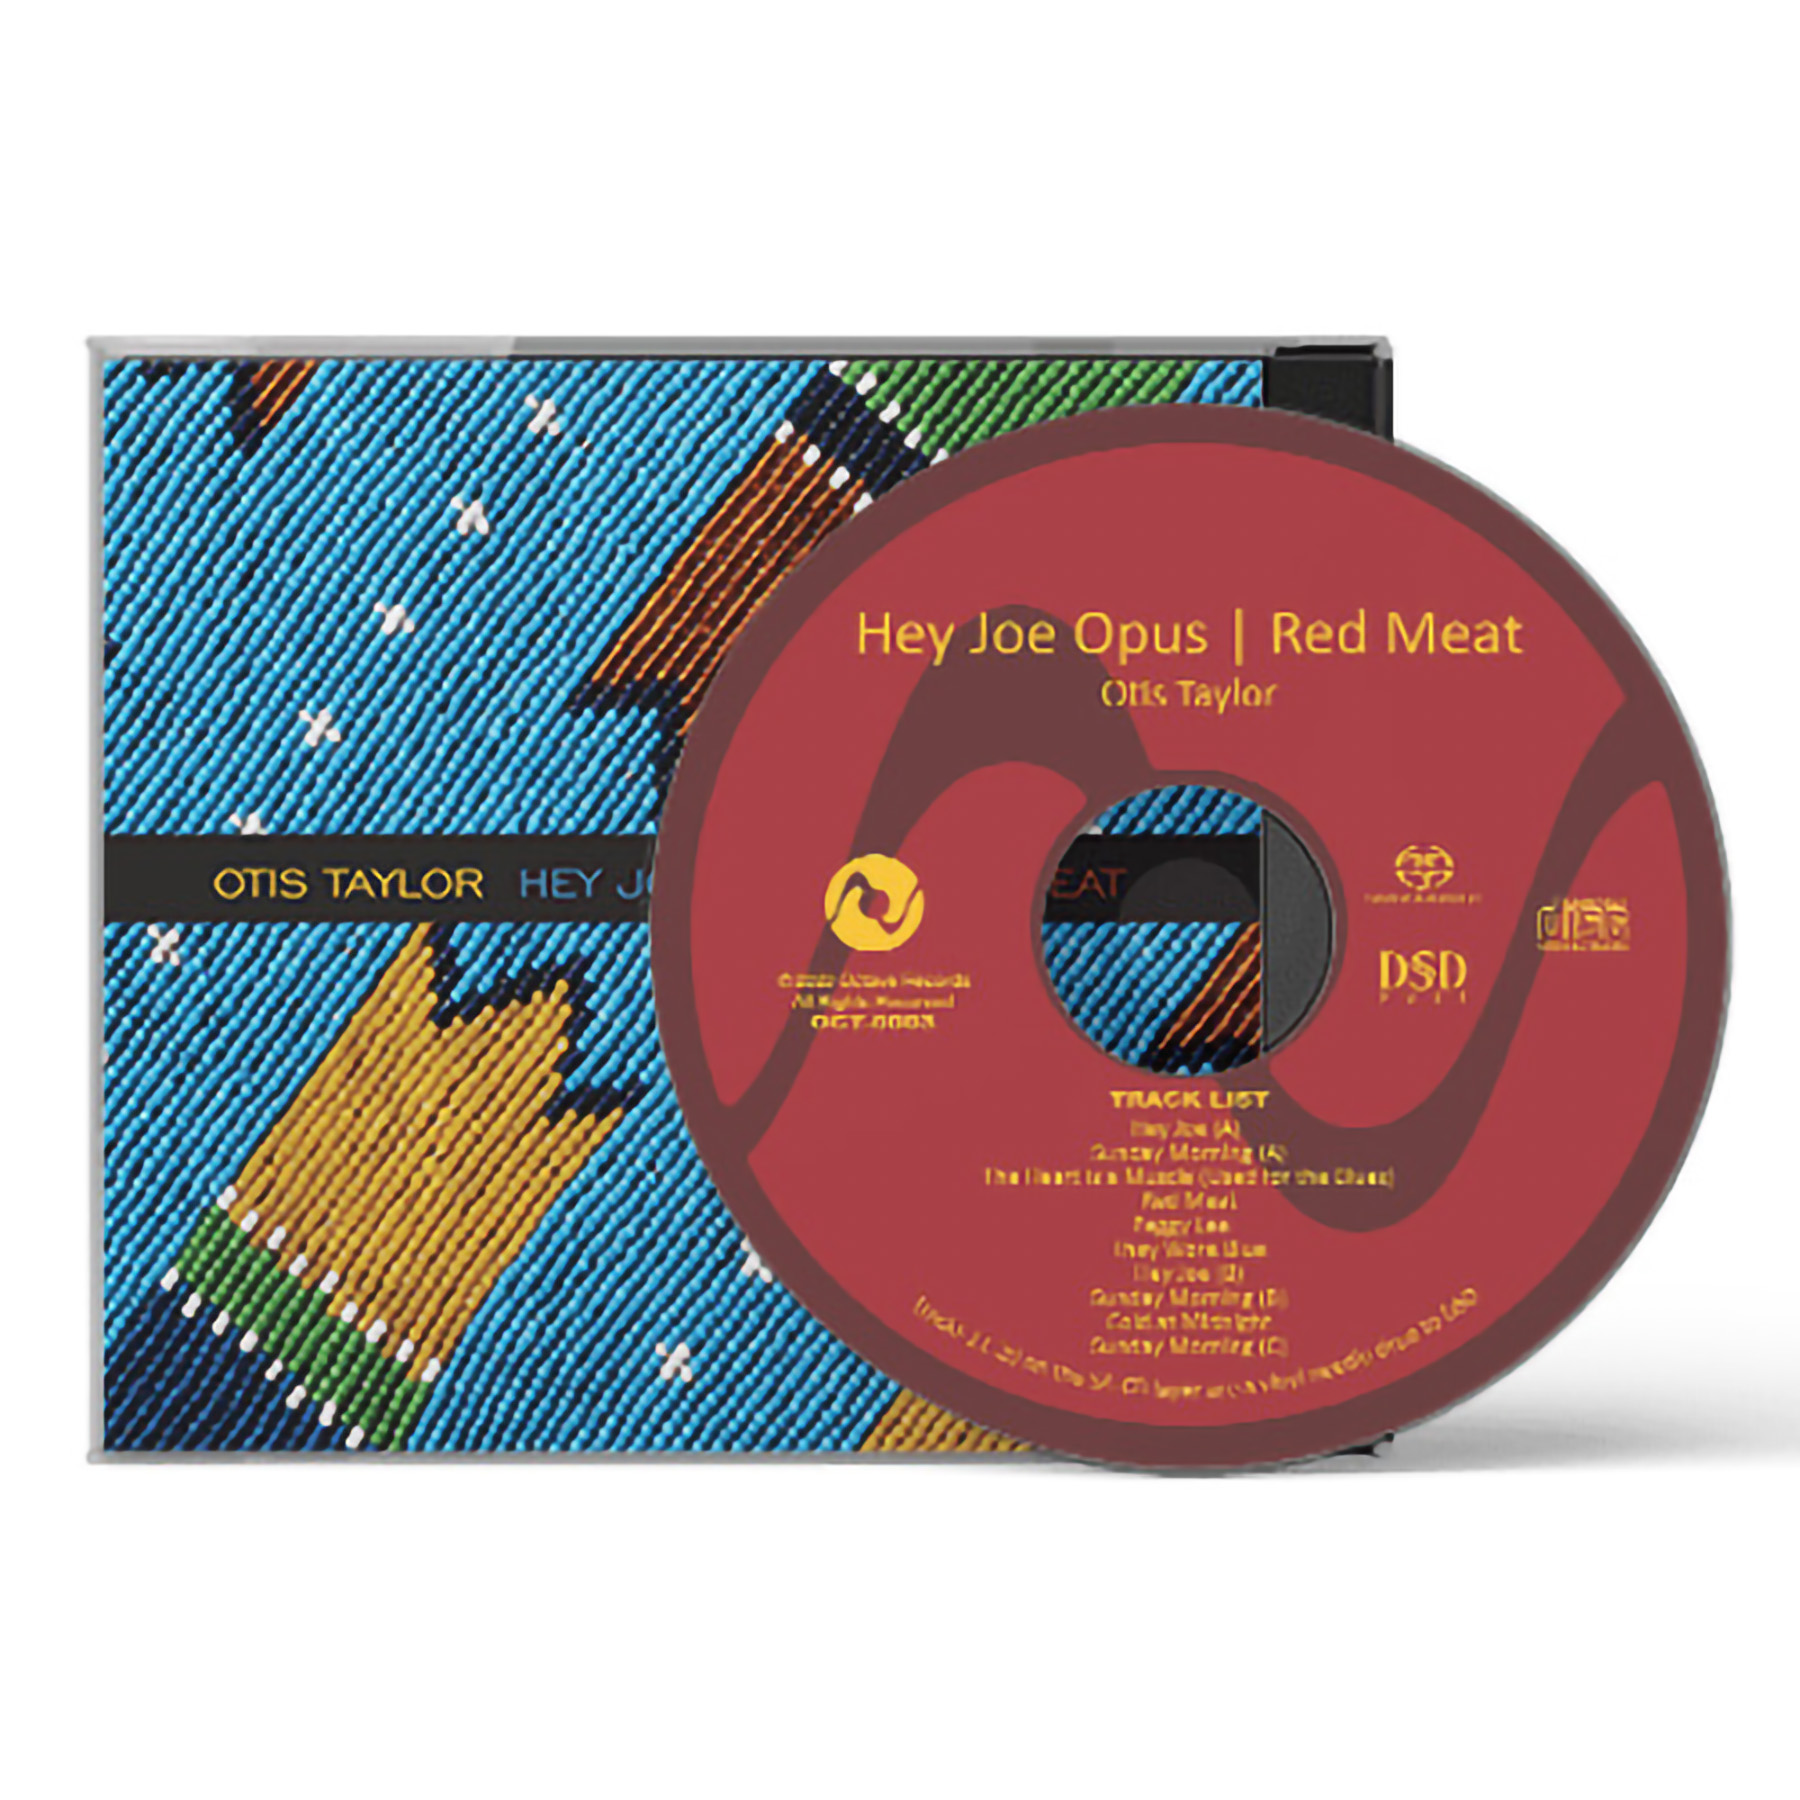 Flash Slink Aside PS Audio Octave Records - Hey Joe | Red Meat - Otis Taylor - Magenta Audio